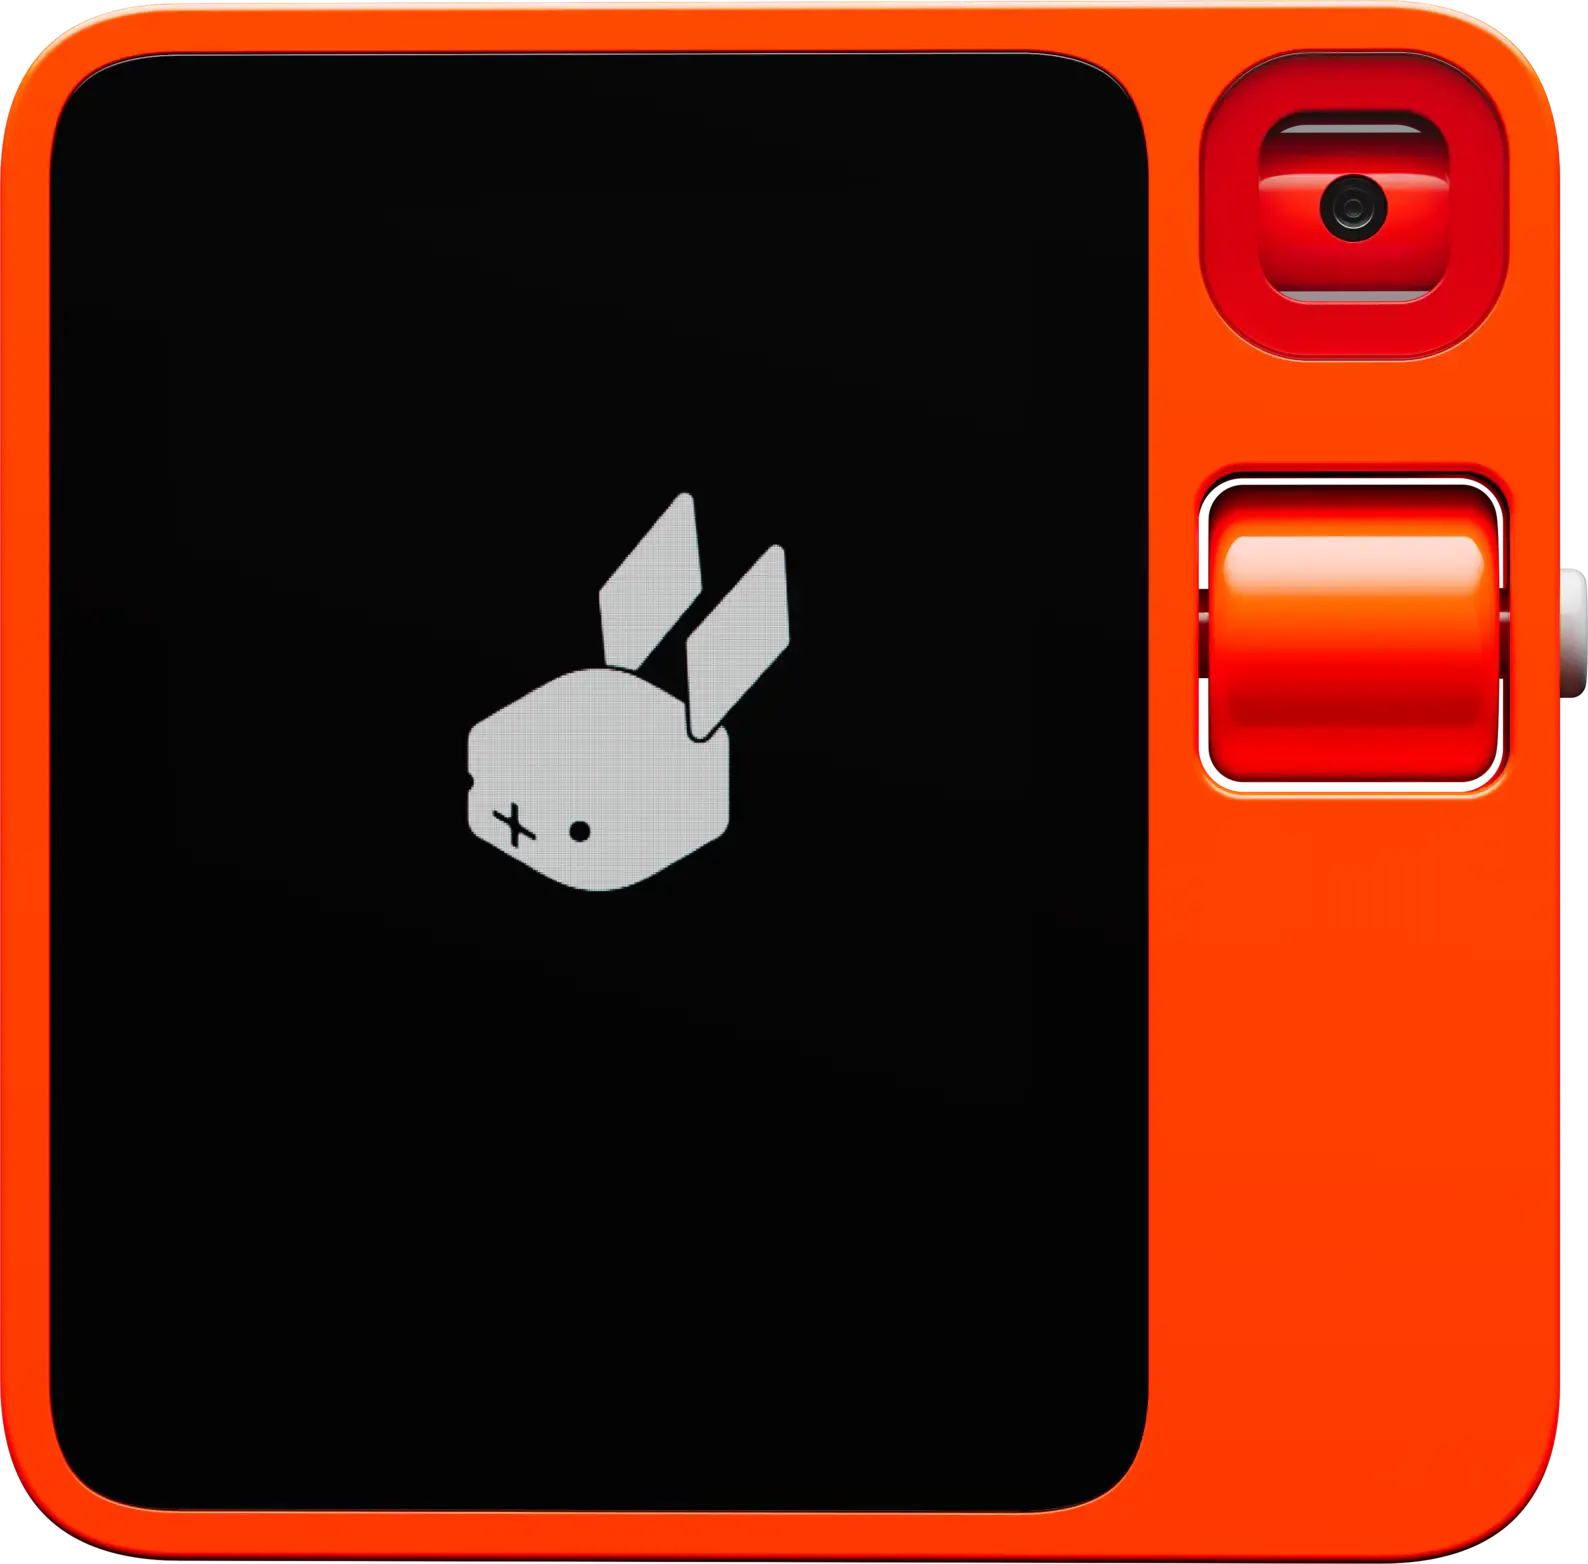 Rabbit R1 smartphone Manual